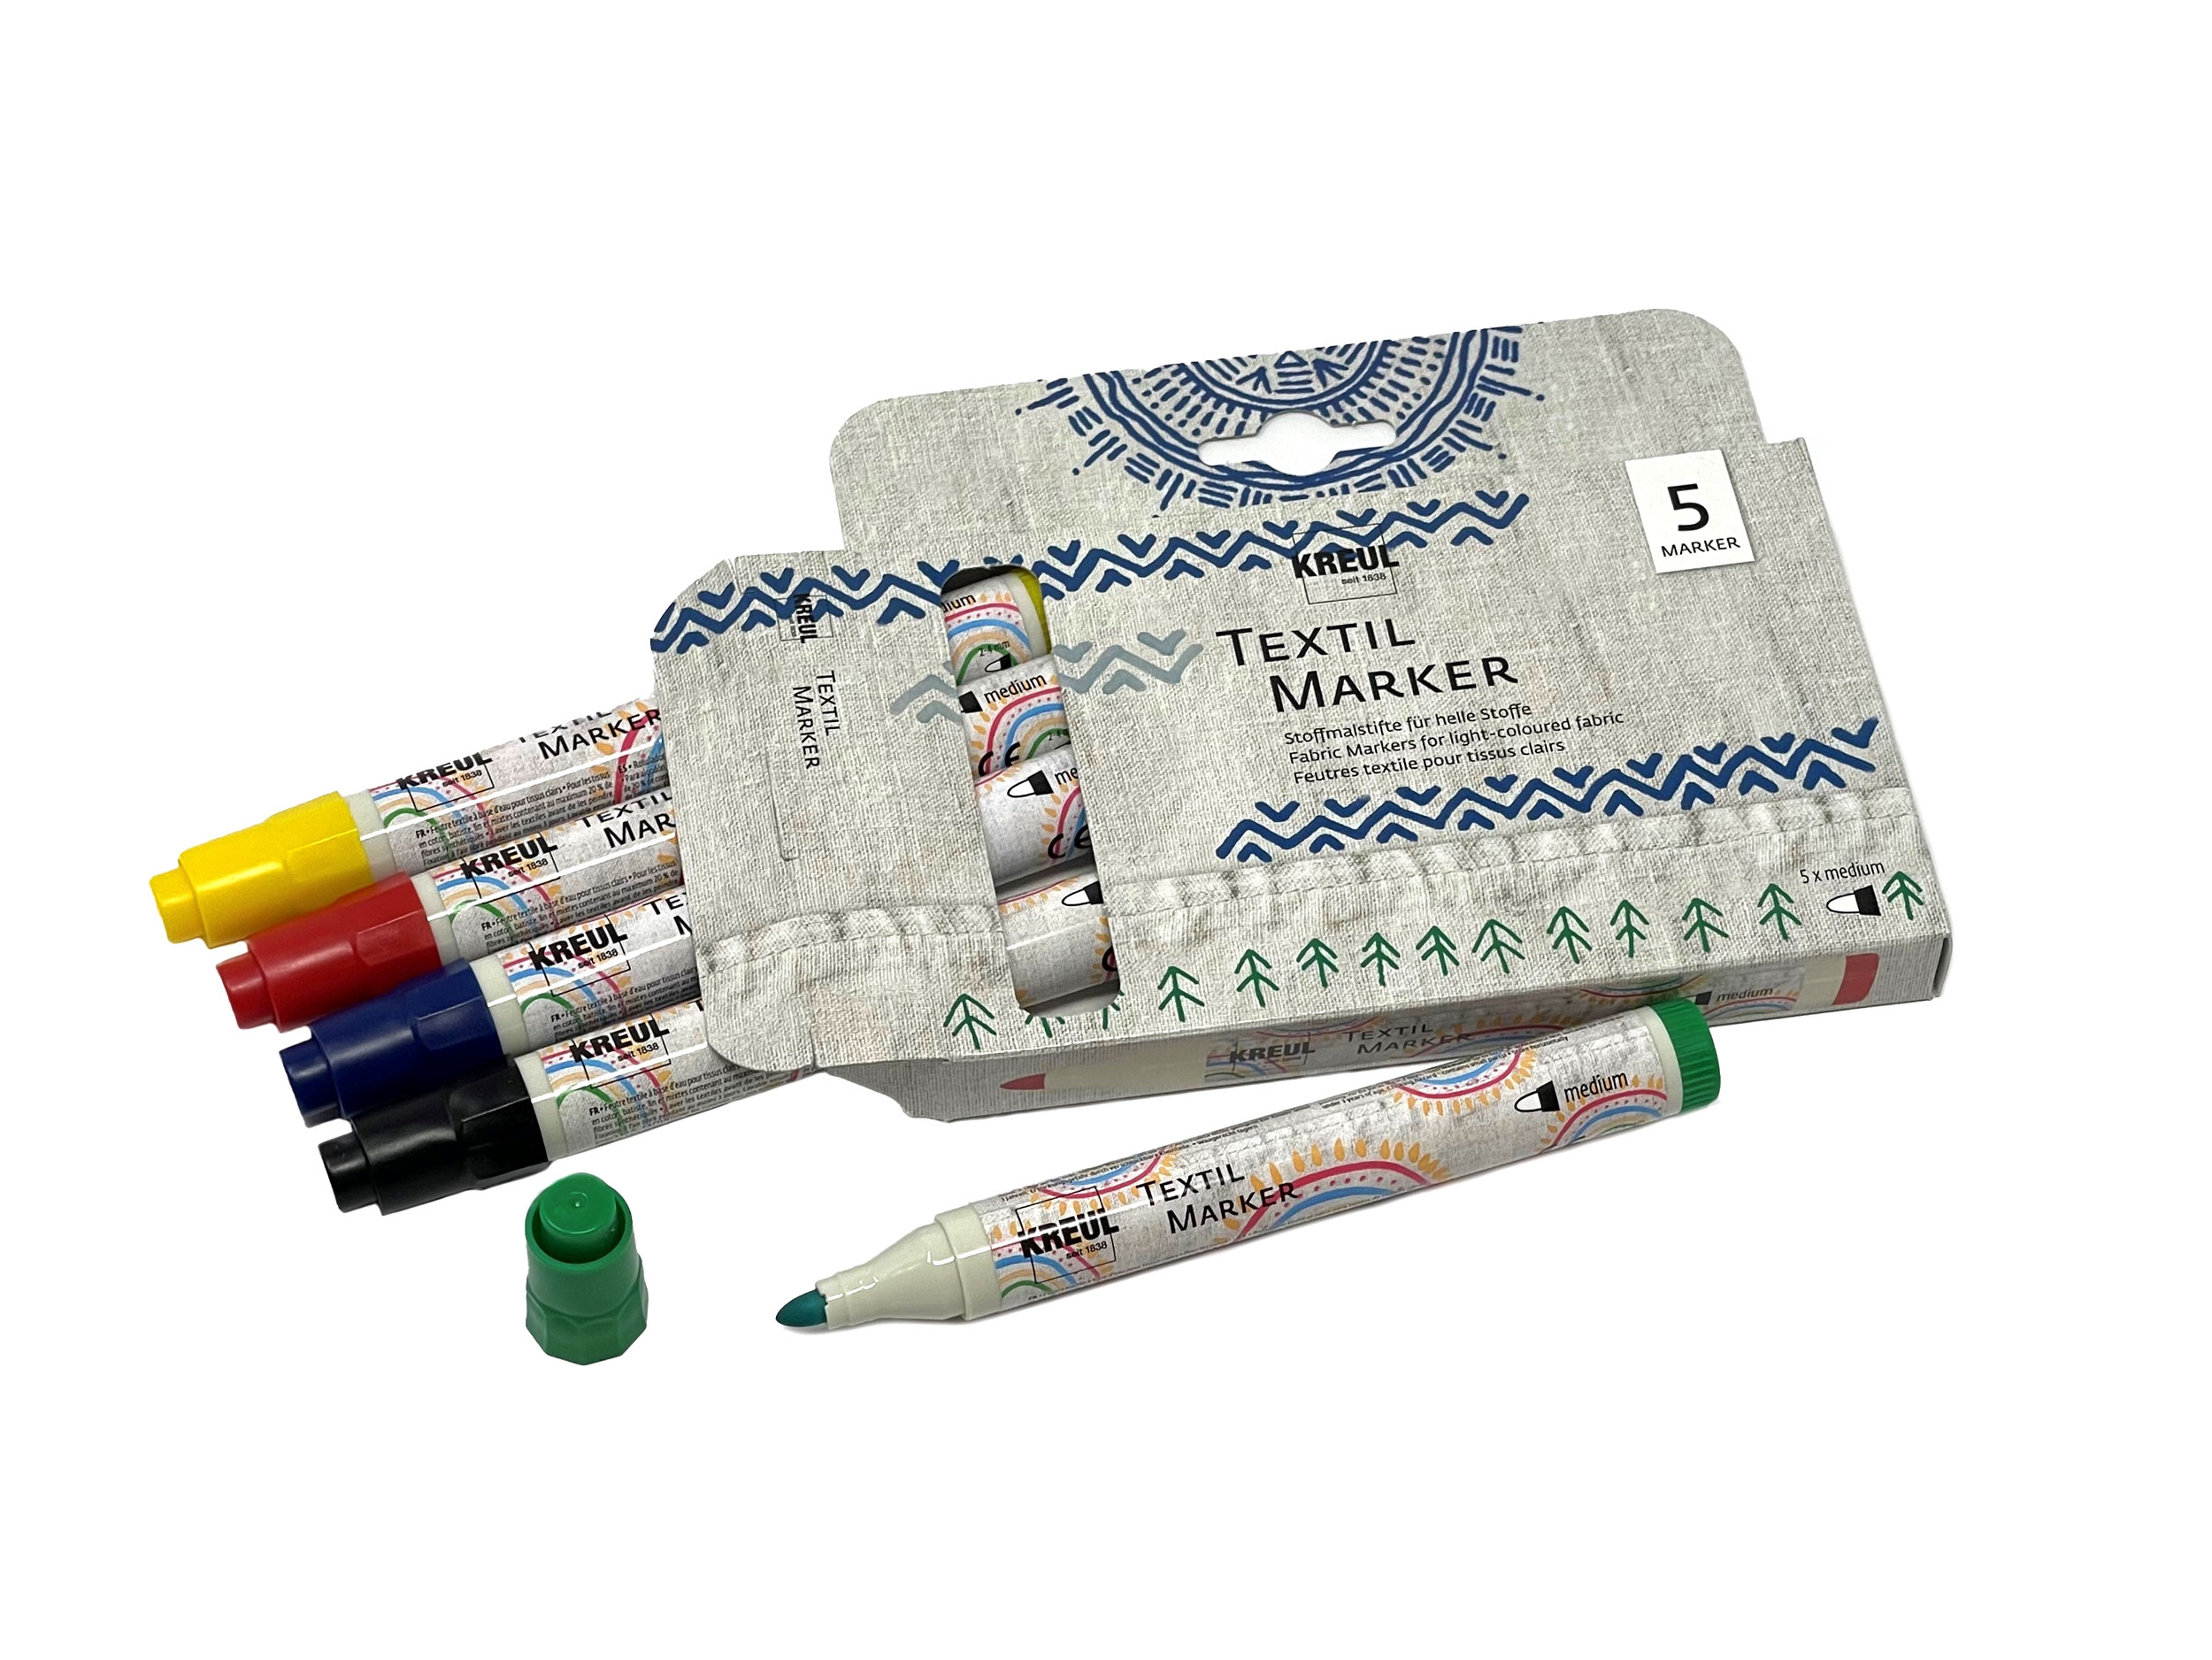 Textilstifte "texi mäx" für Kids